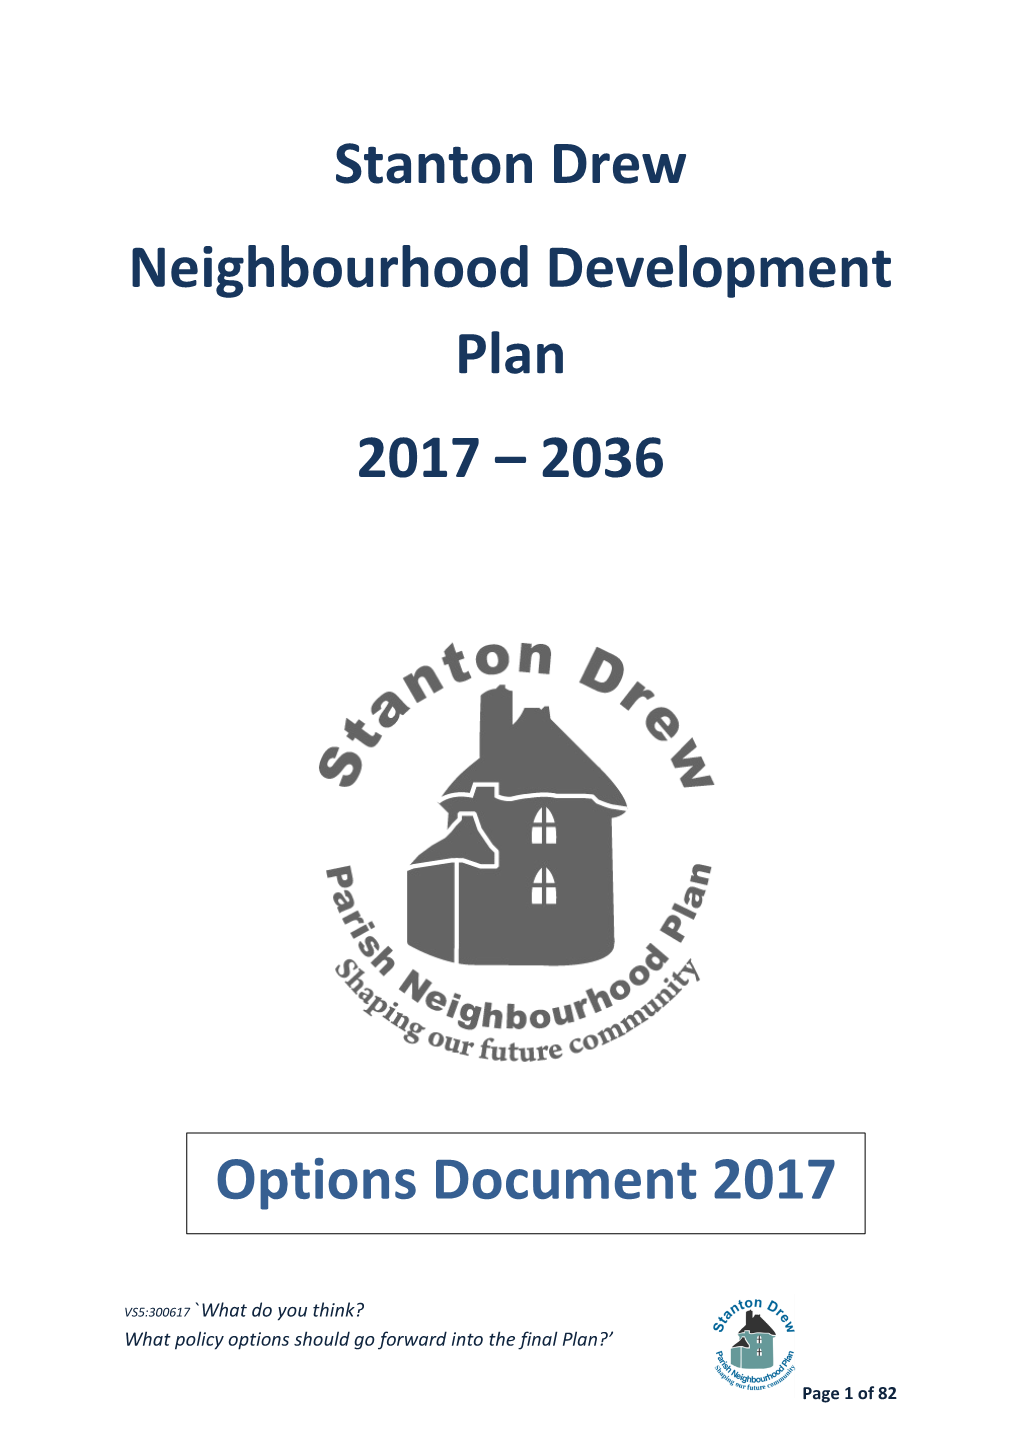 Stanton Drew Neighbourhood Development Plan 2017 – 2036